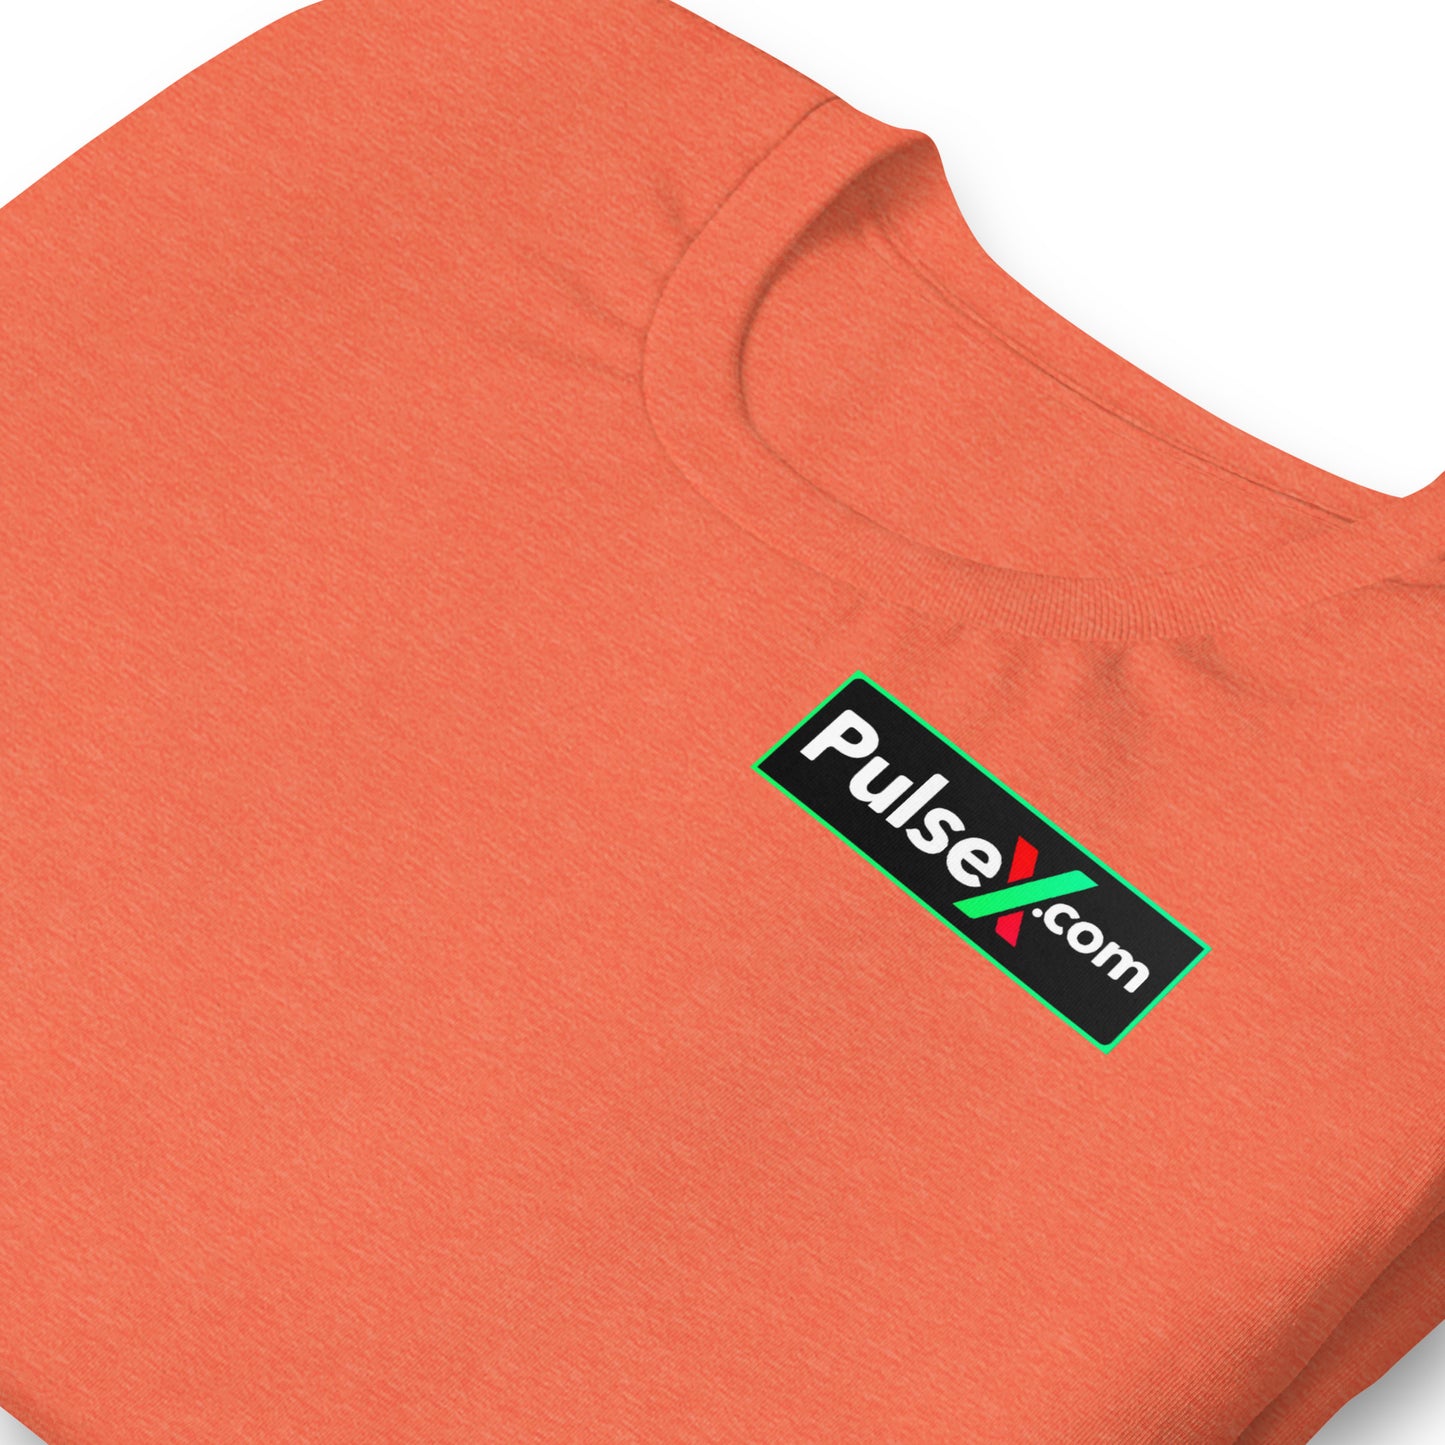 PulseX.com Unisex T-Shirt